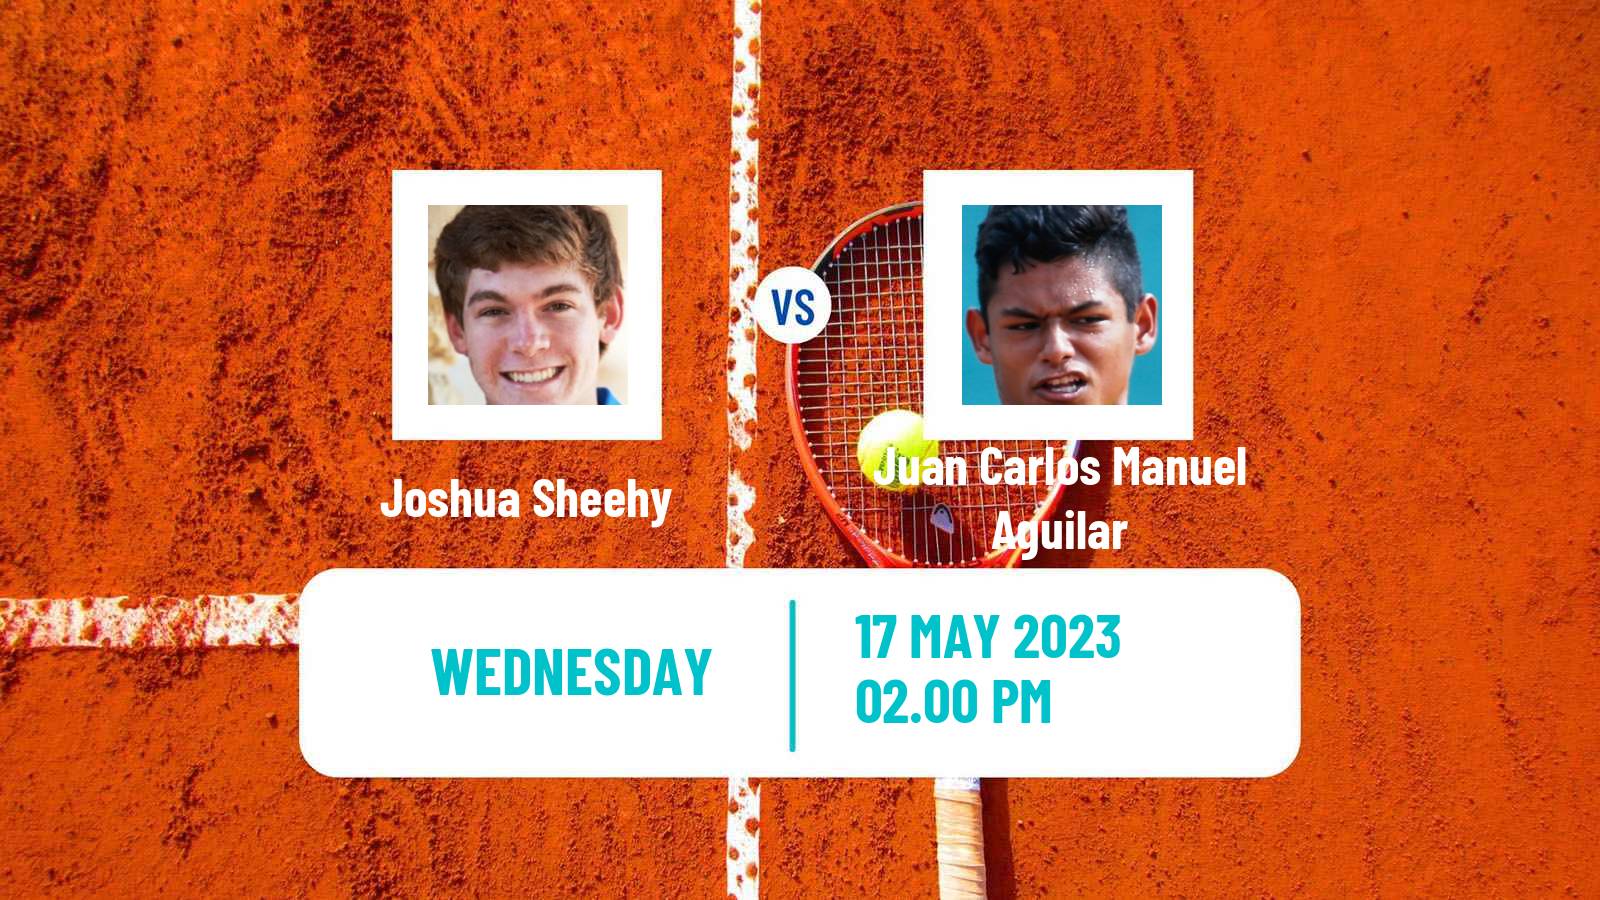 Tennis ITF M25 Xalapa Men Joshua Sheehy - Juan Carlos Manuel Aguilar